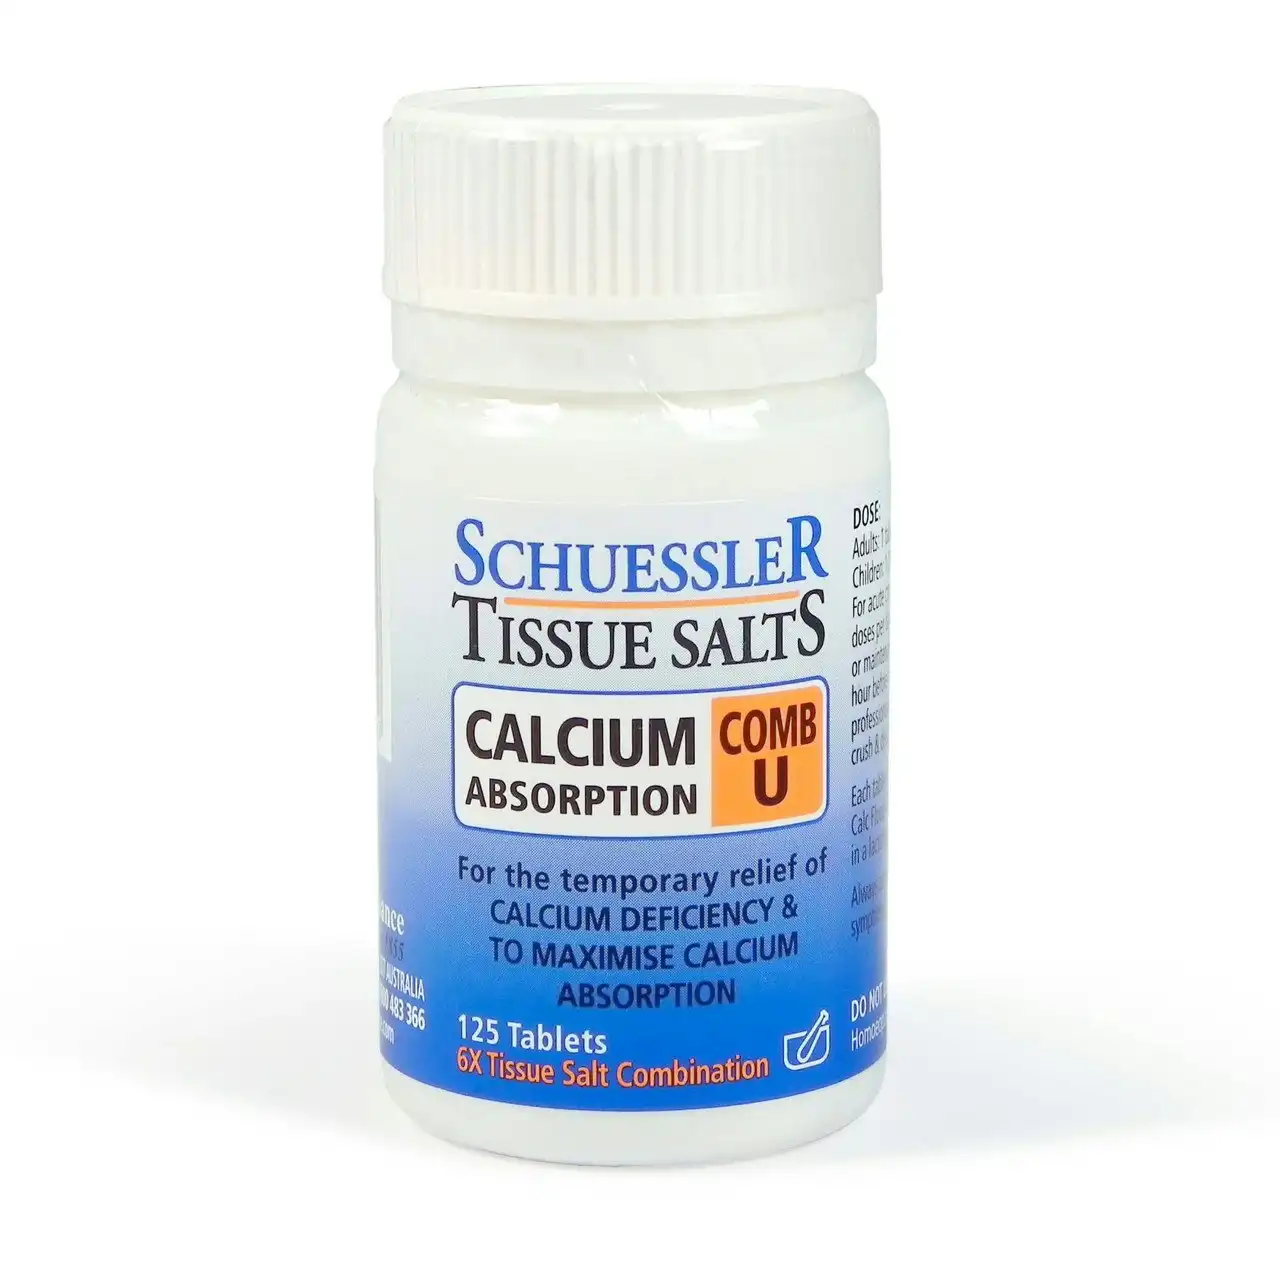 Schuessler Tissue Salts Calcium Absorption Comb U Tablets 125